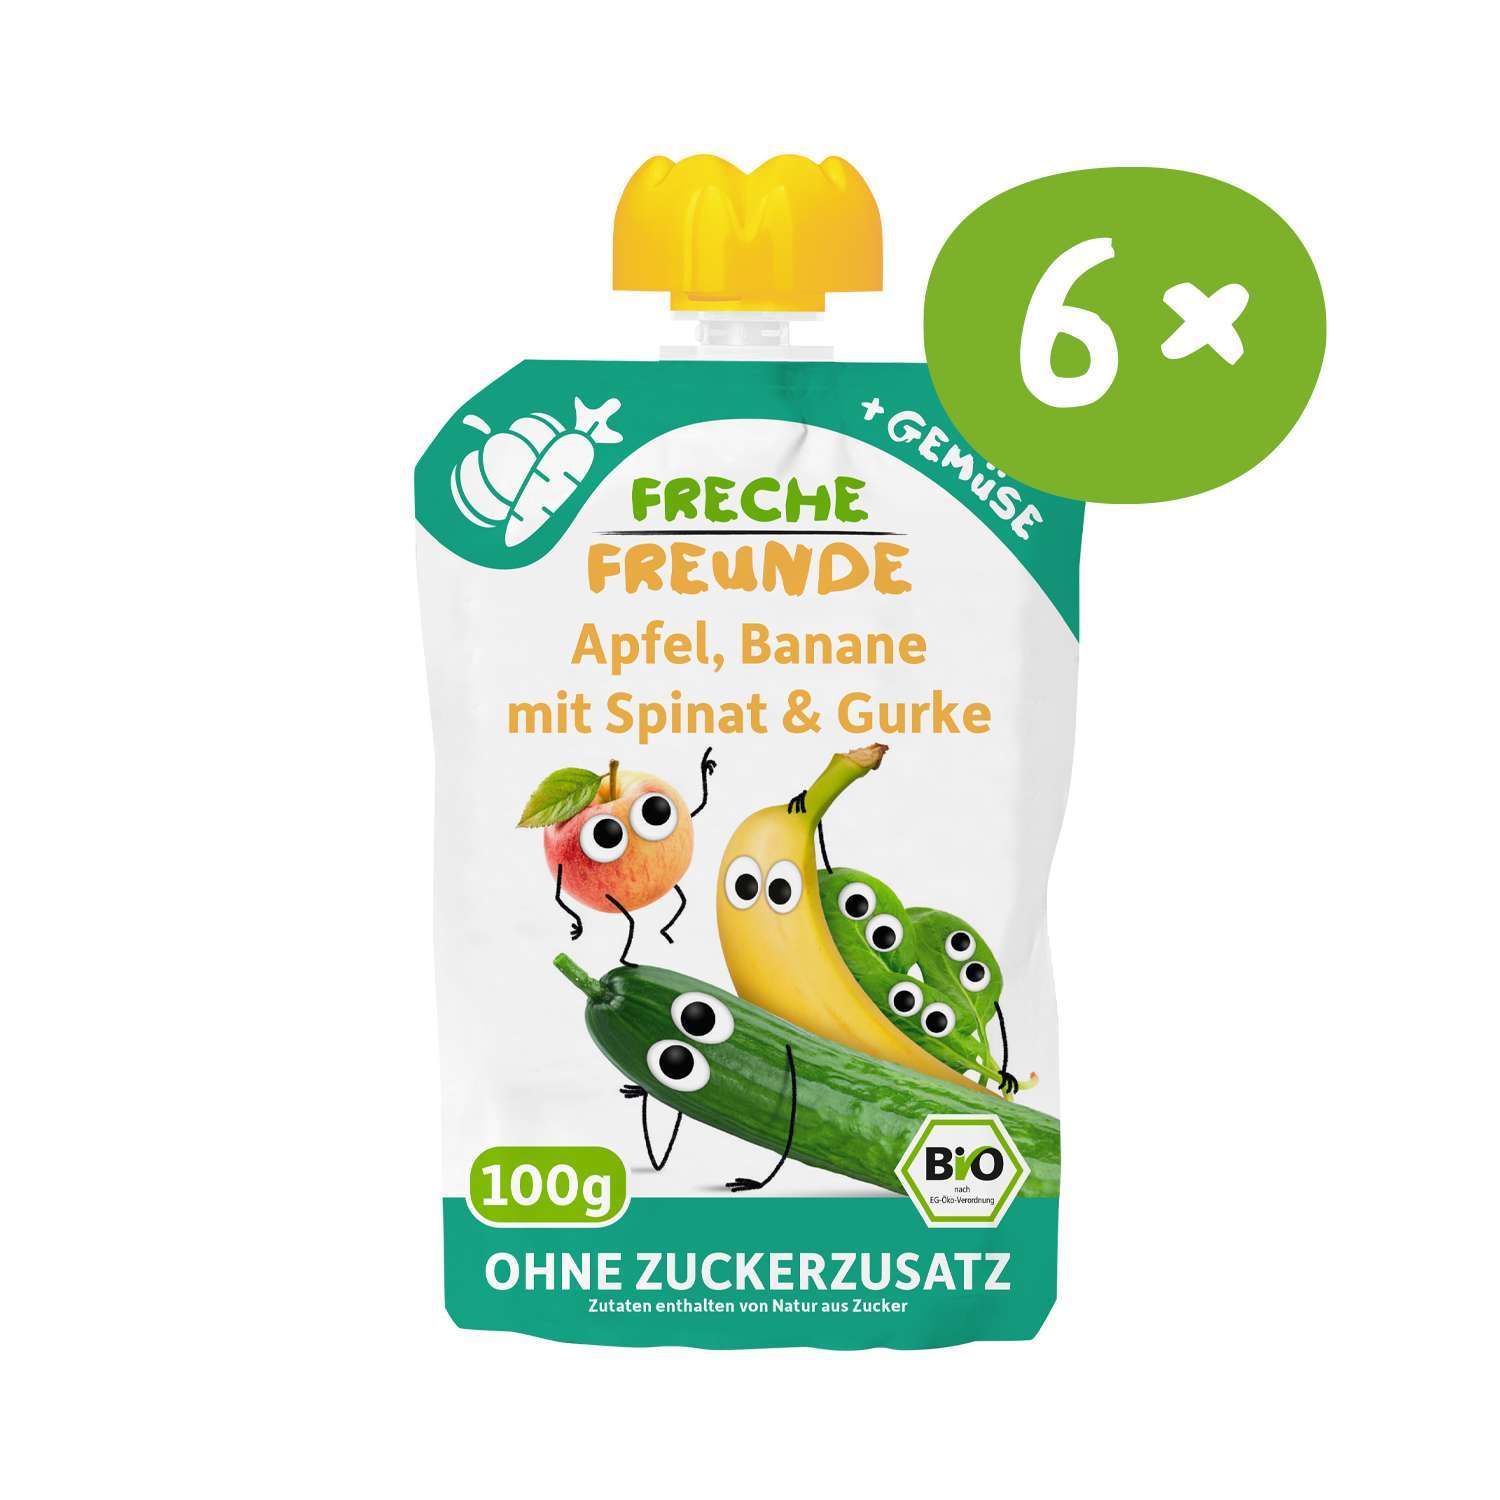 Quetschie_Apfel-Banane-Spinat-Gurke-stoerer